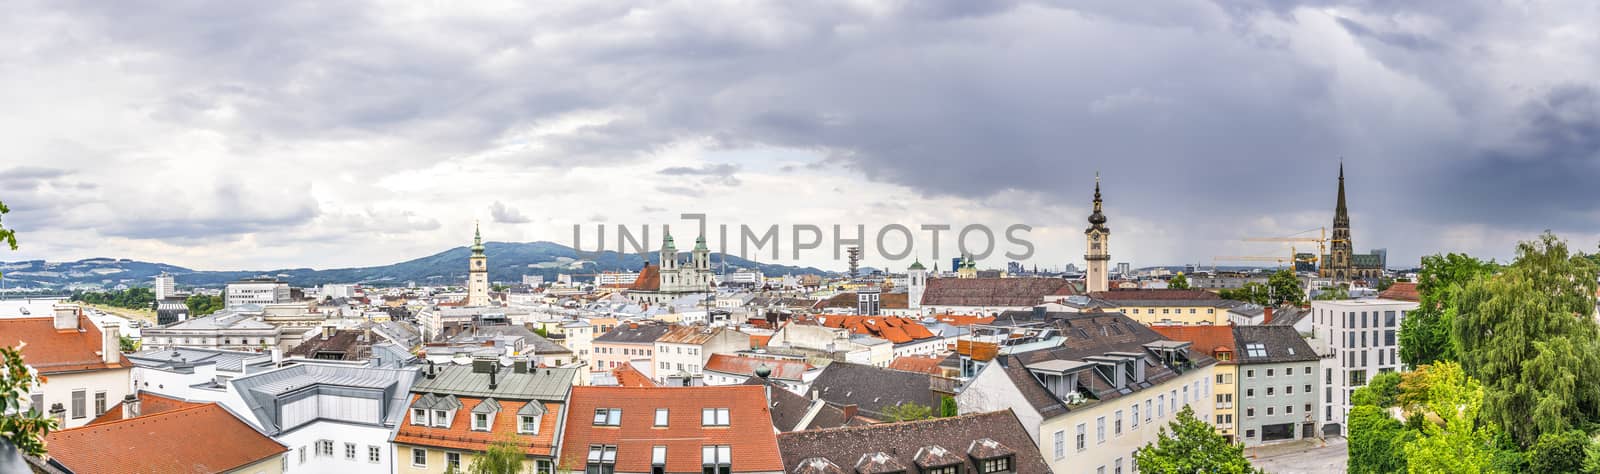 Dramatic Linz Panorama by w20er